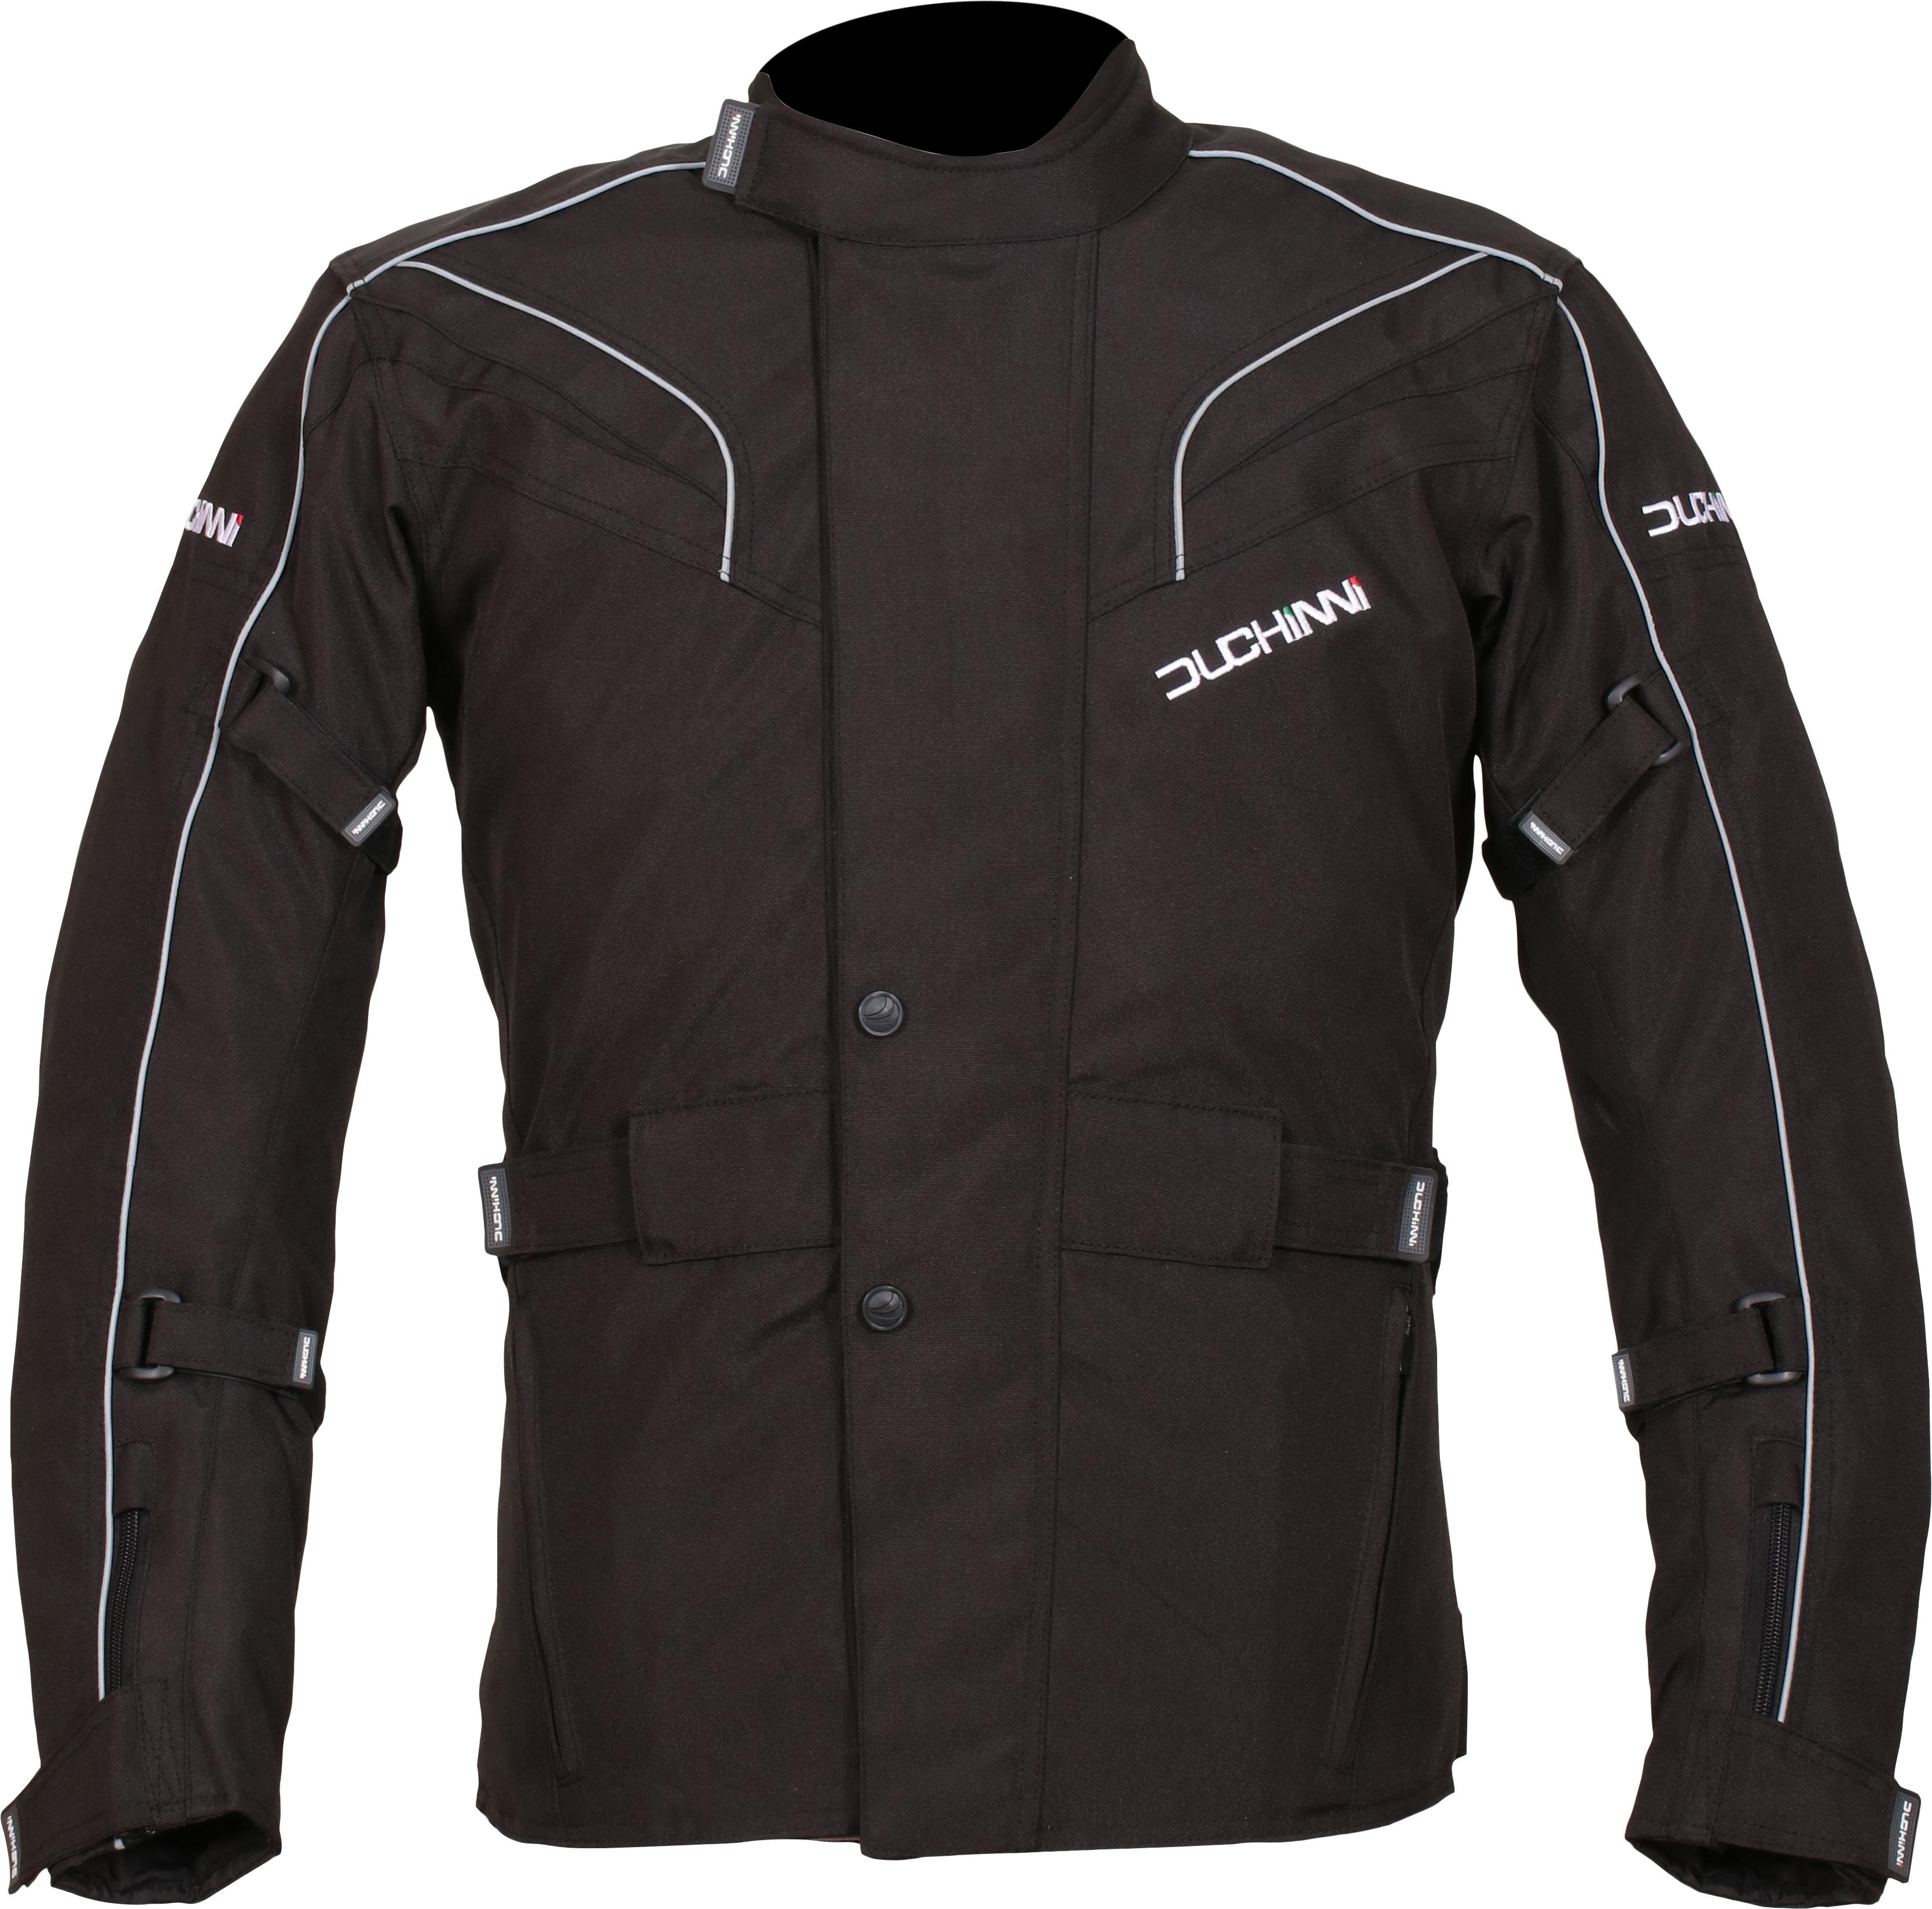 Duchinni Hurricane Motorcycle Jacket - Black, 5Xl